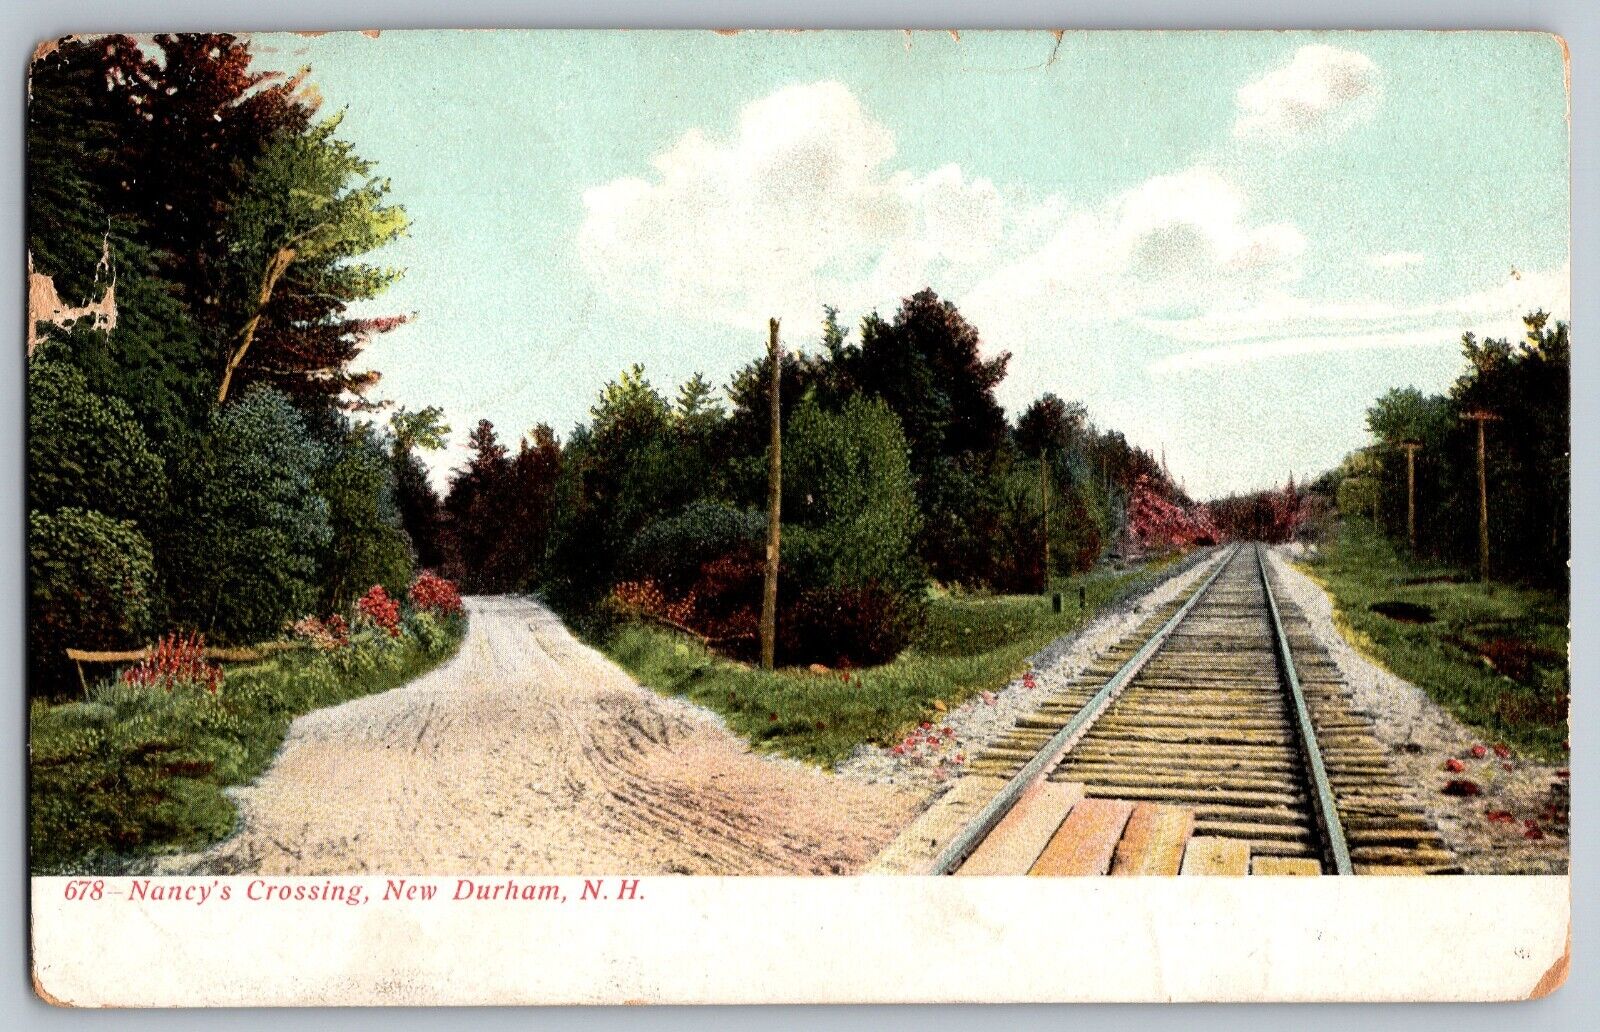 New Durham, NH - Lake Shore - Railroad - Nancy's Crossing - Vintage Postcard